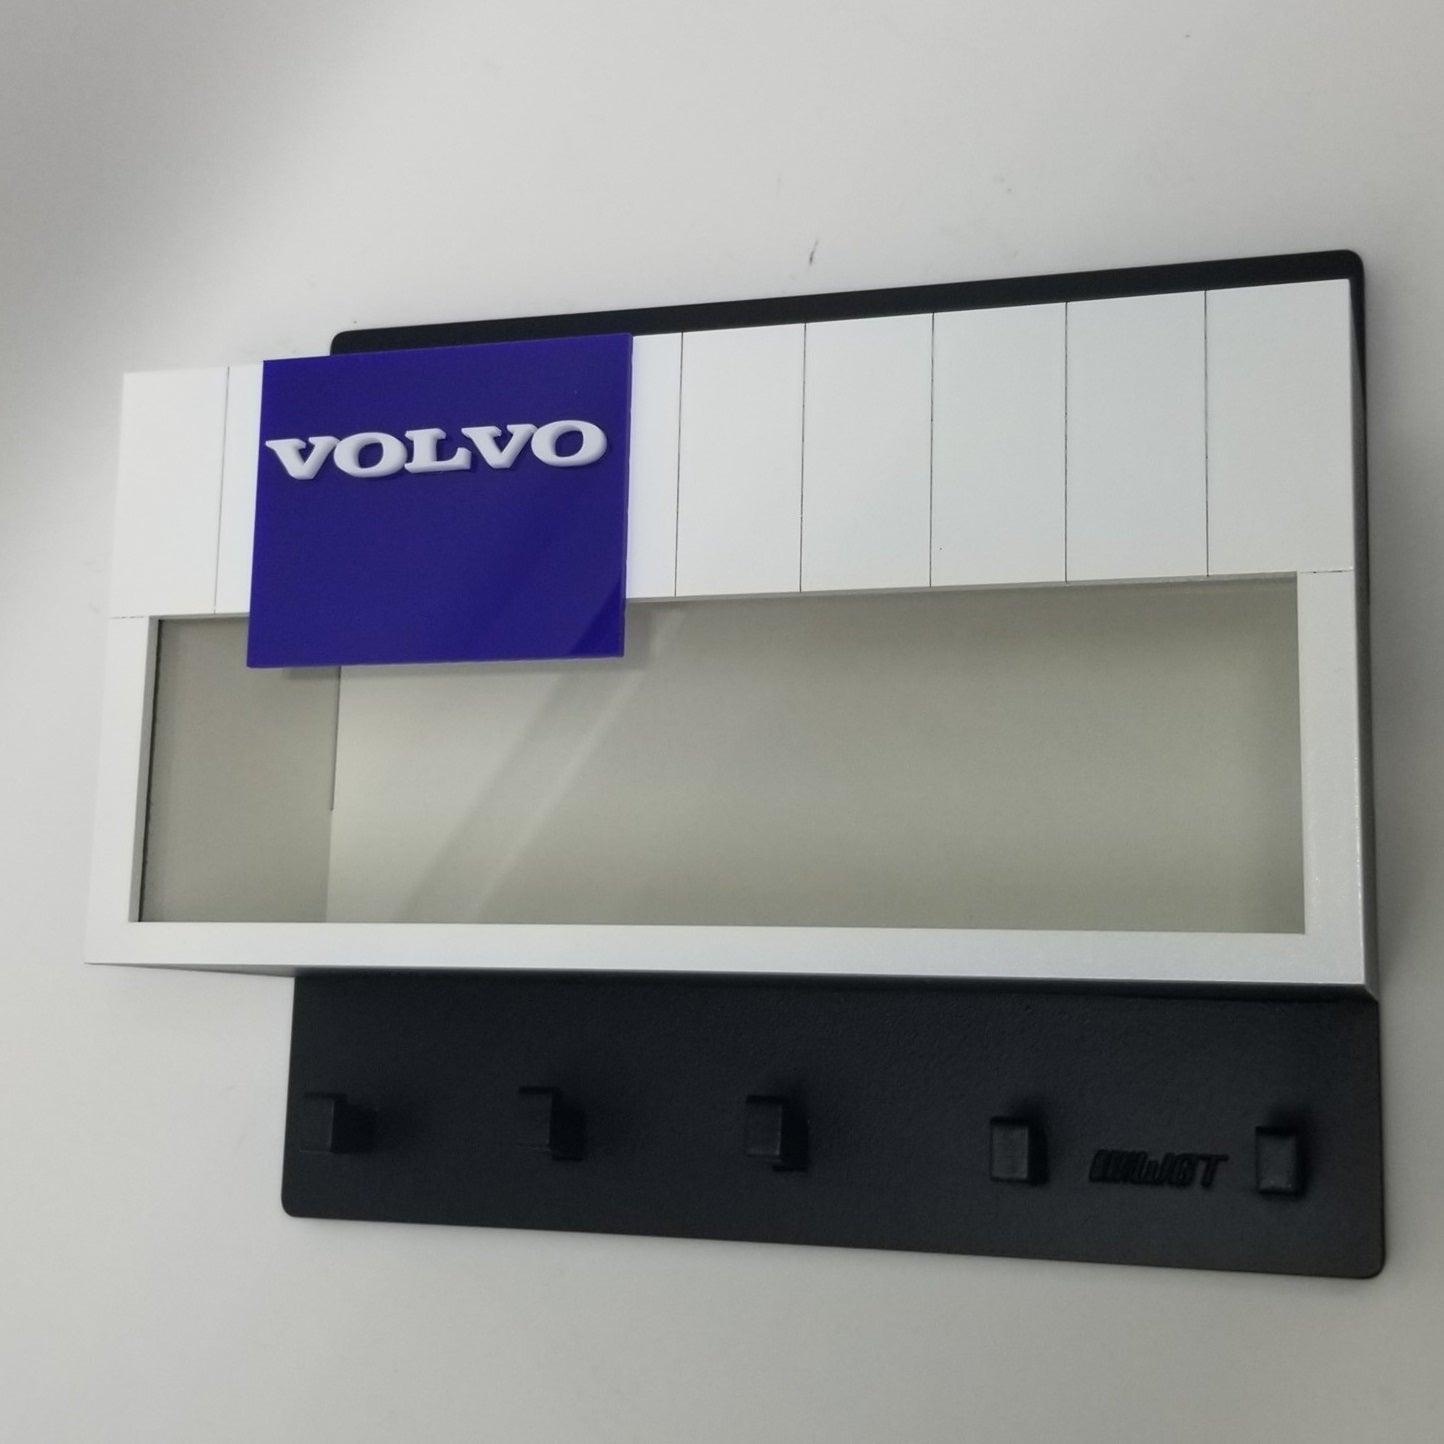 Volvo Dealership Wall Key Hook Rack - Exclusive Item - Handcrafted Key Holder - Brazilian Shop